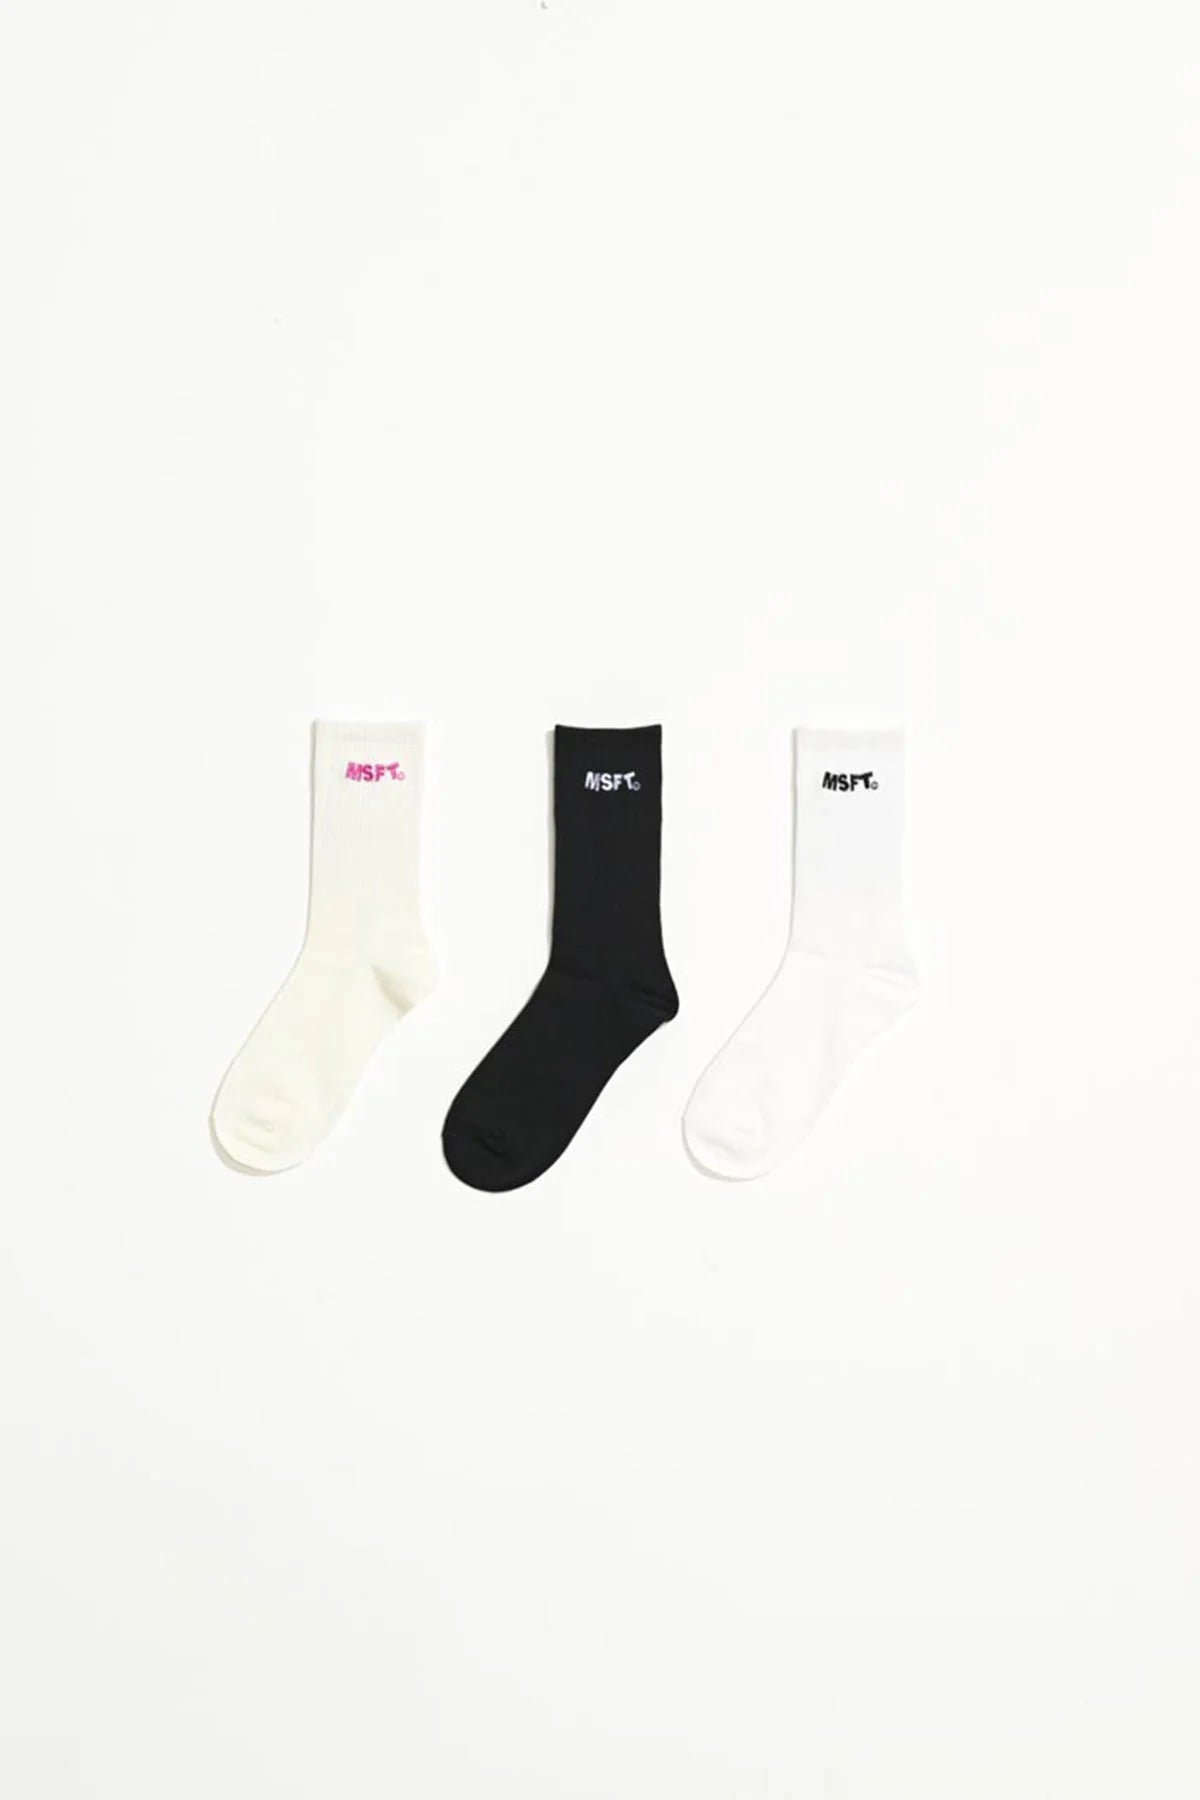 Devod Hemp Women's Socks - Multi